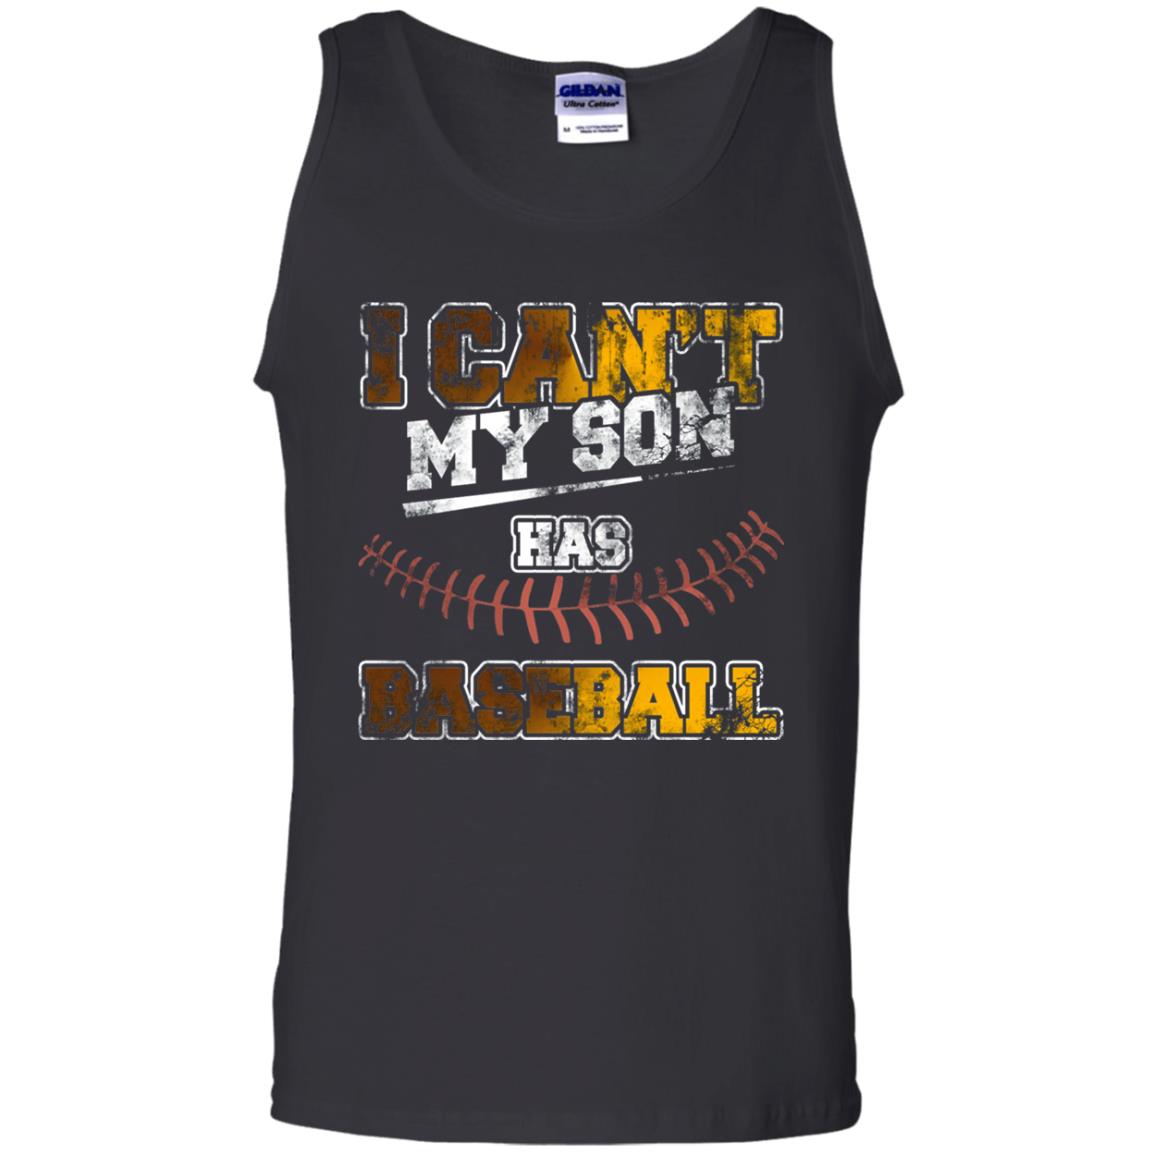 Baseball Mom Dad Shirt I Cant My Son Has Baseball